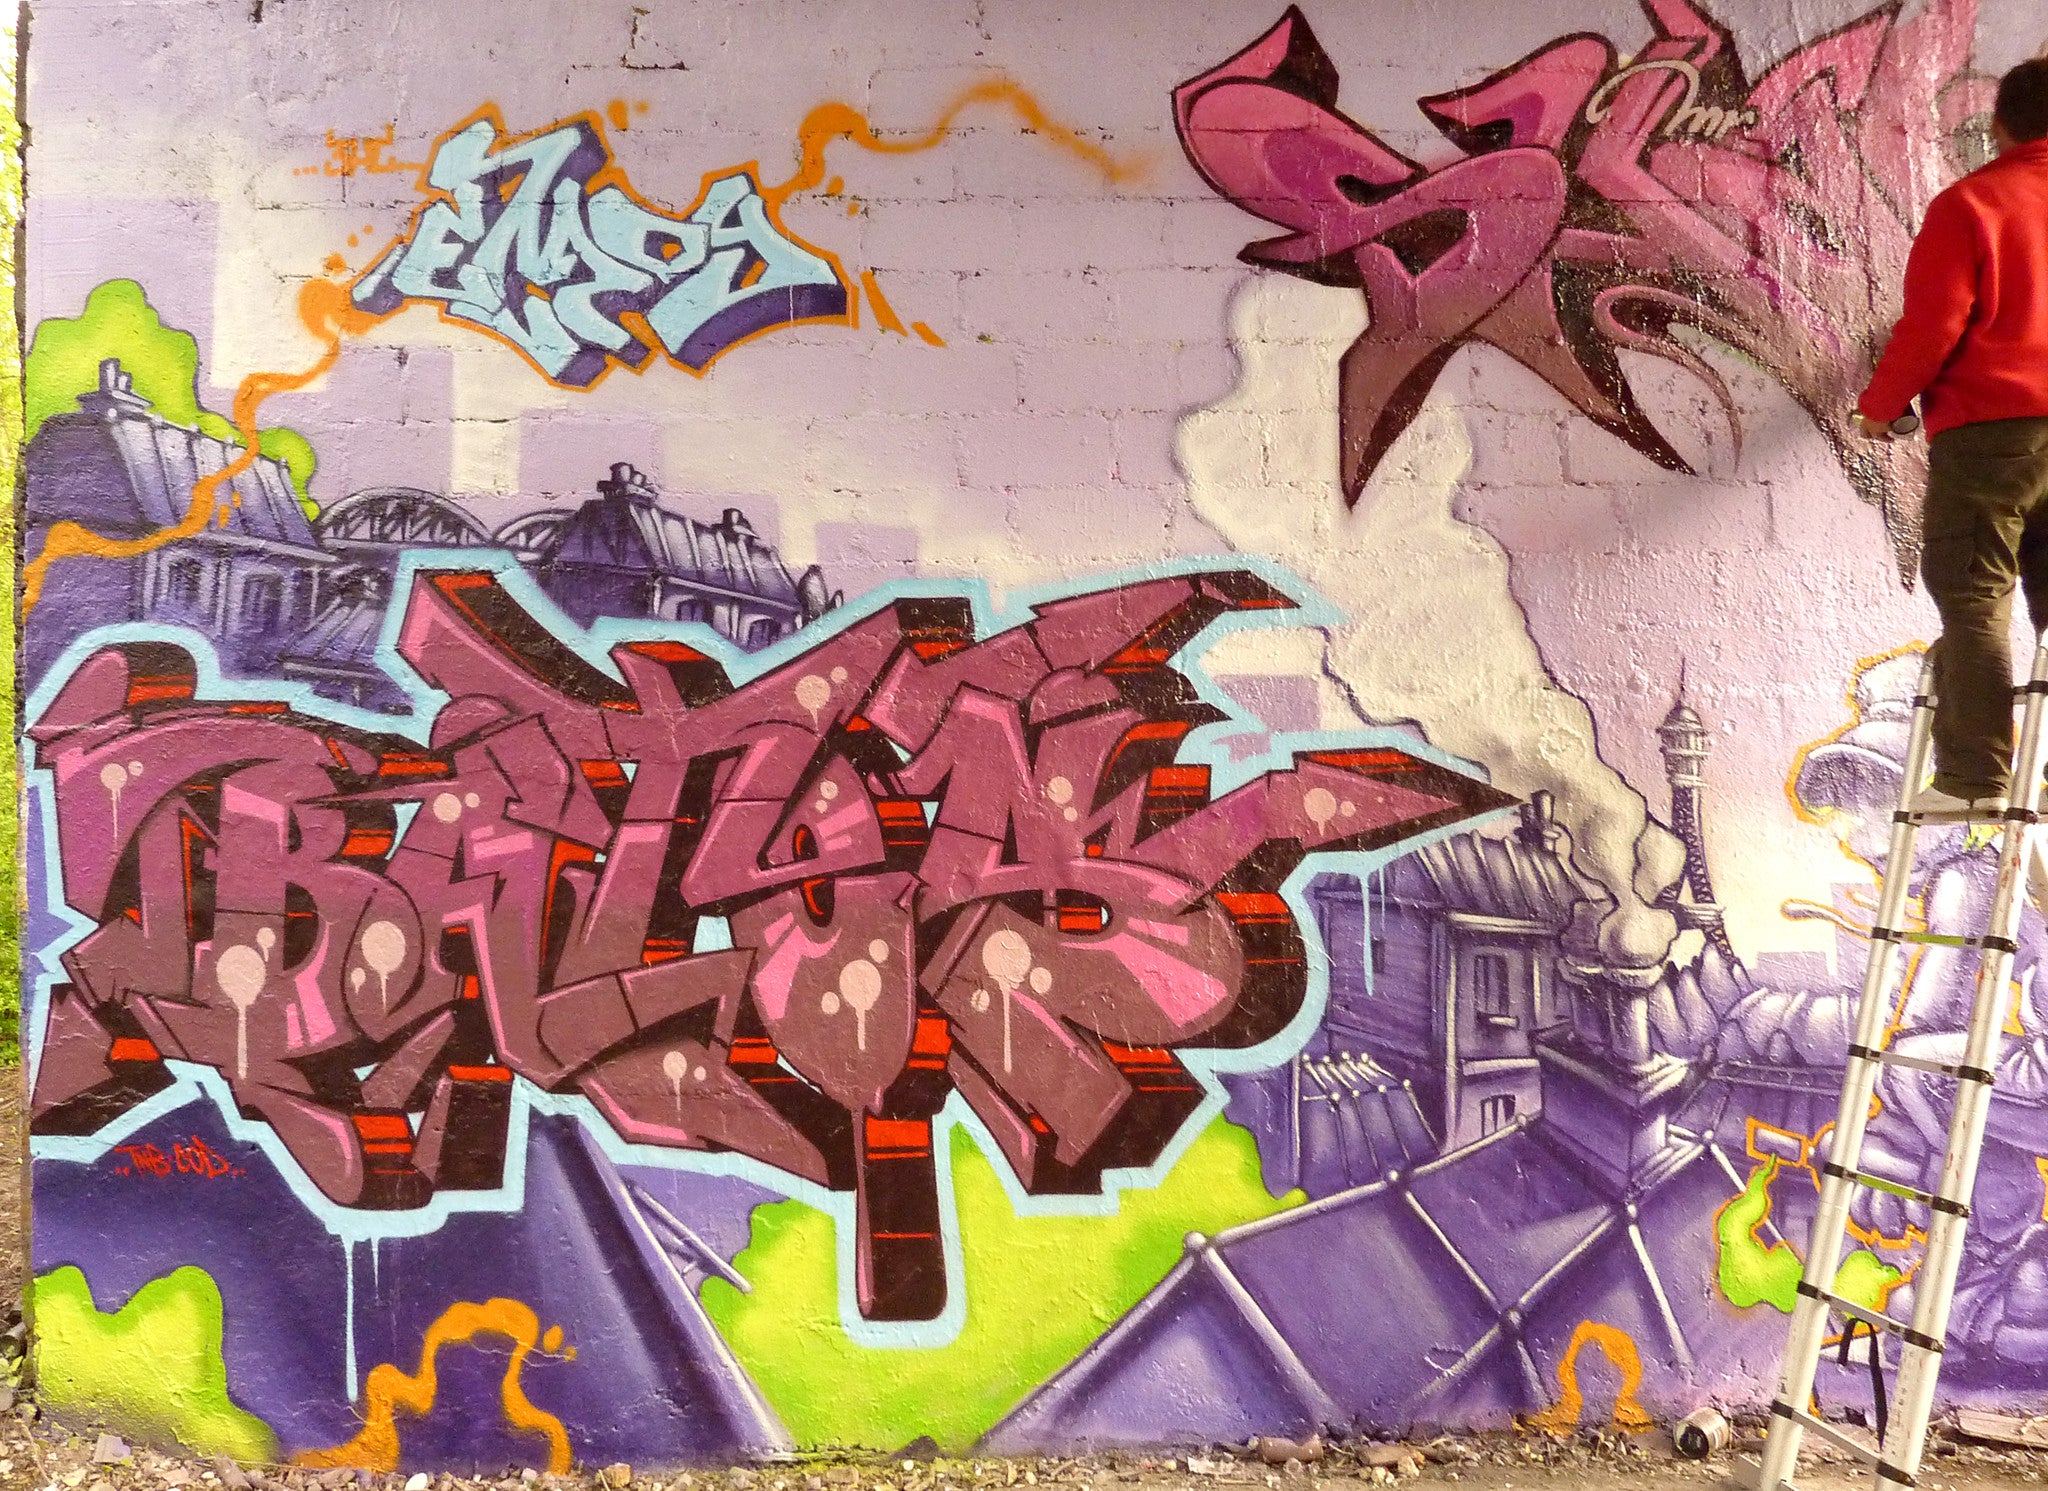 bates graffiti piece action shot